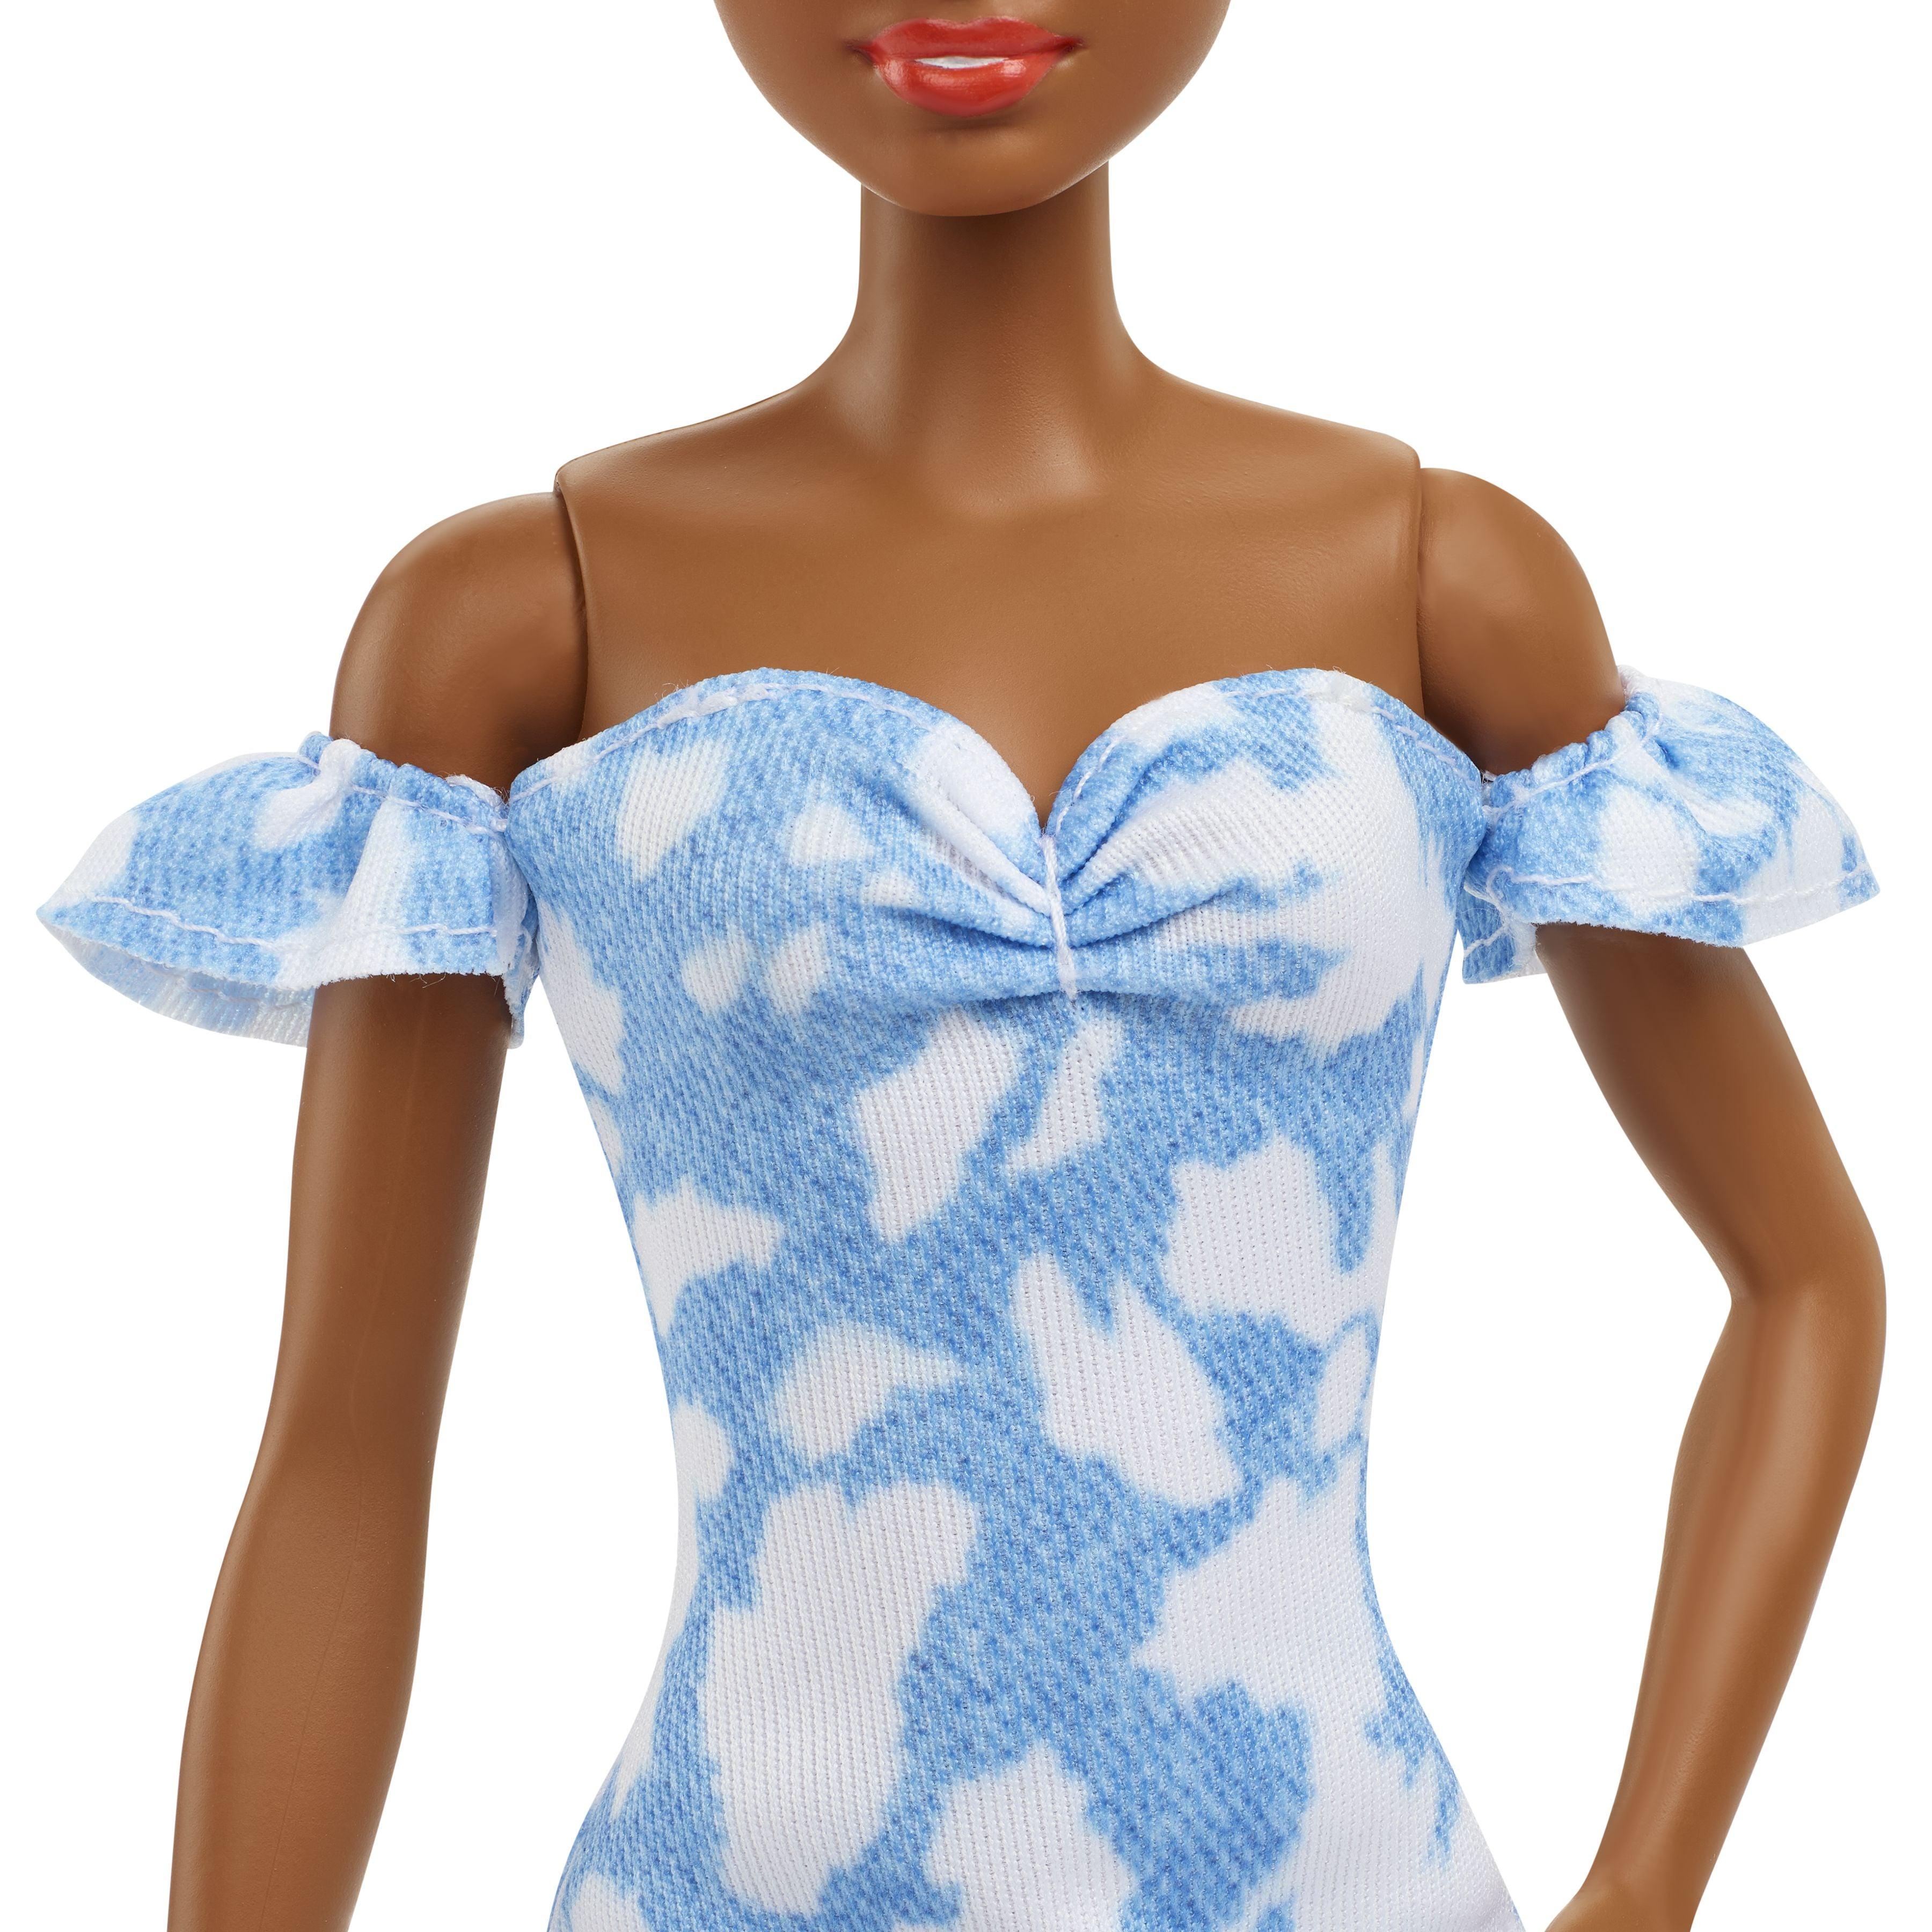 Barbie Fashionista Doll 185 - FunCorp India